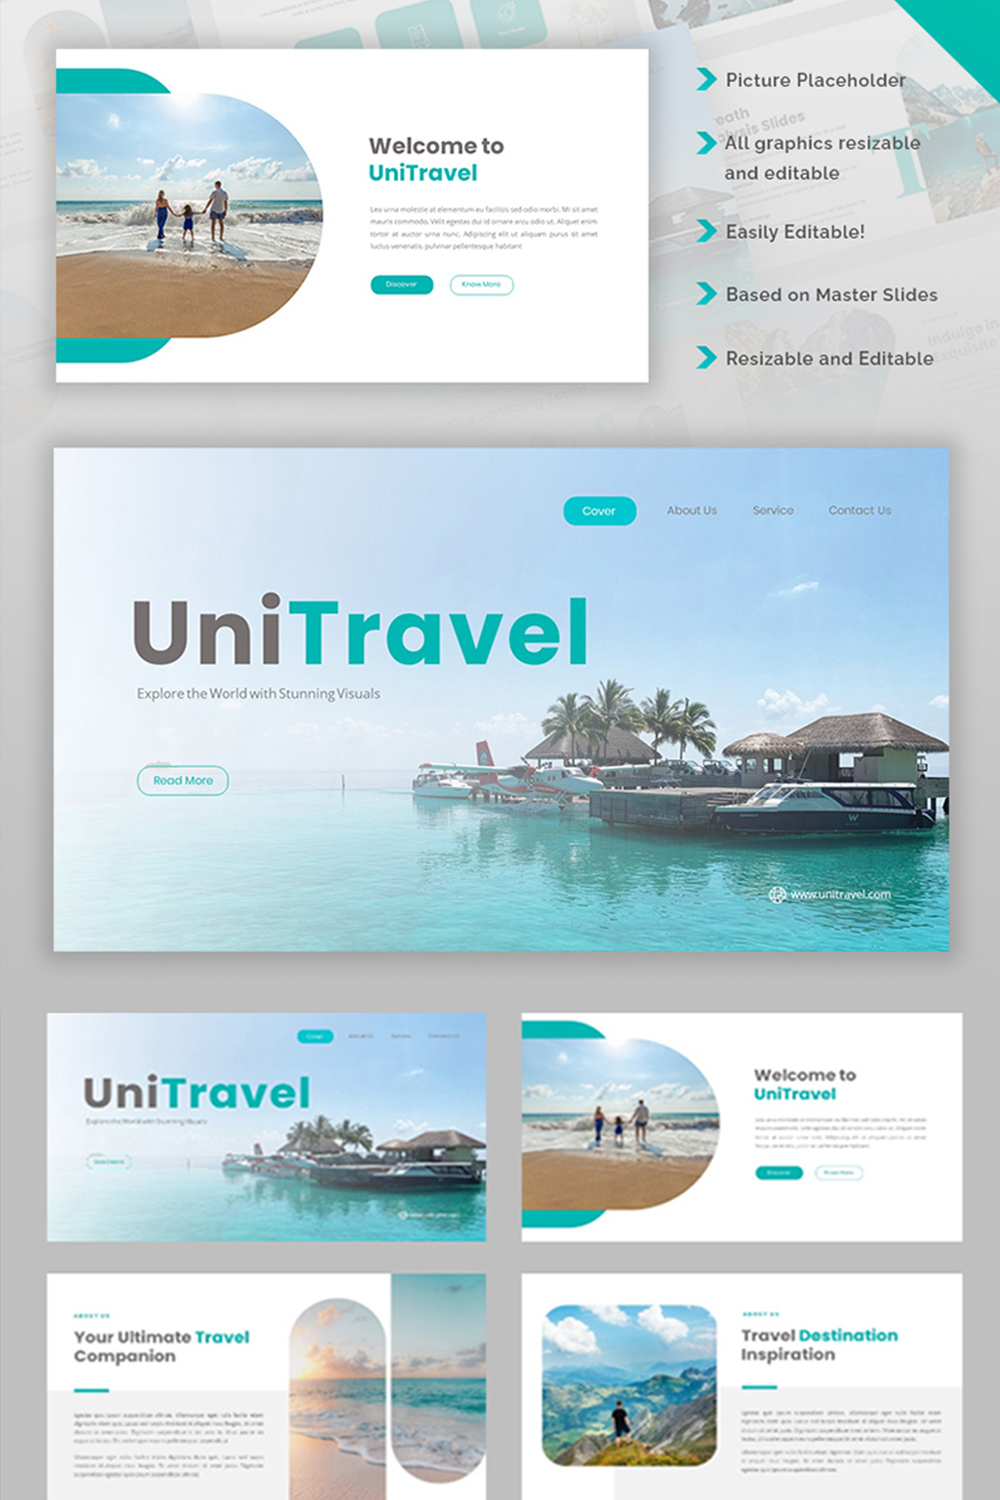 UniTravel-Travel Agency Google Slides Template pinterest preview image.